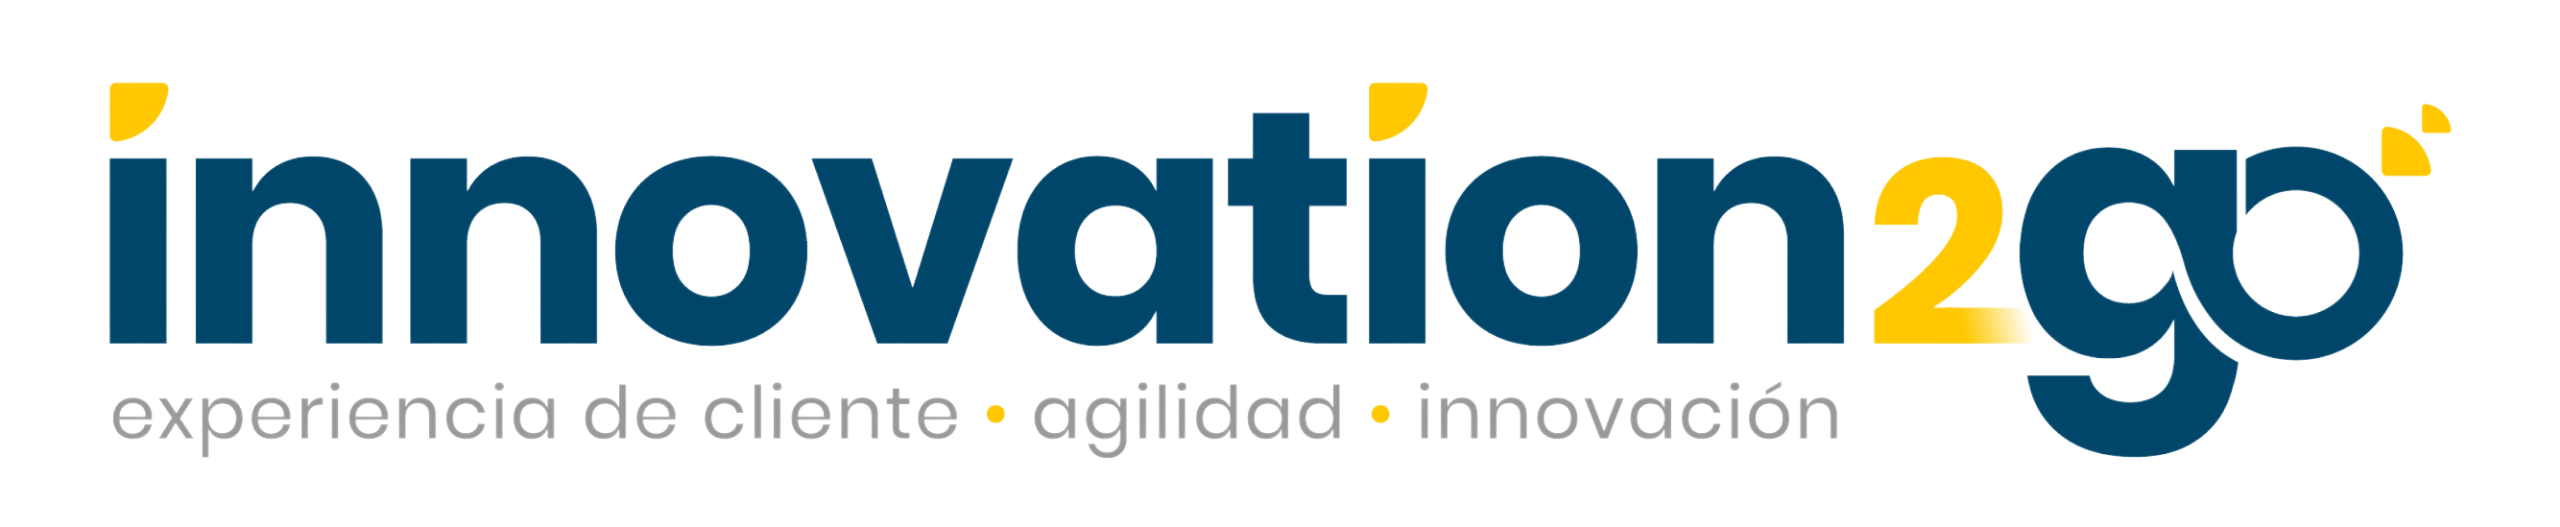 logo innovation2go